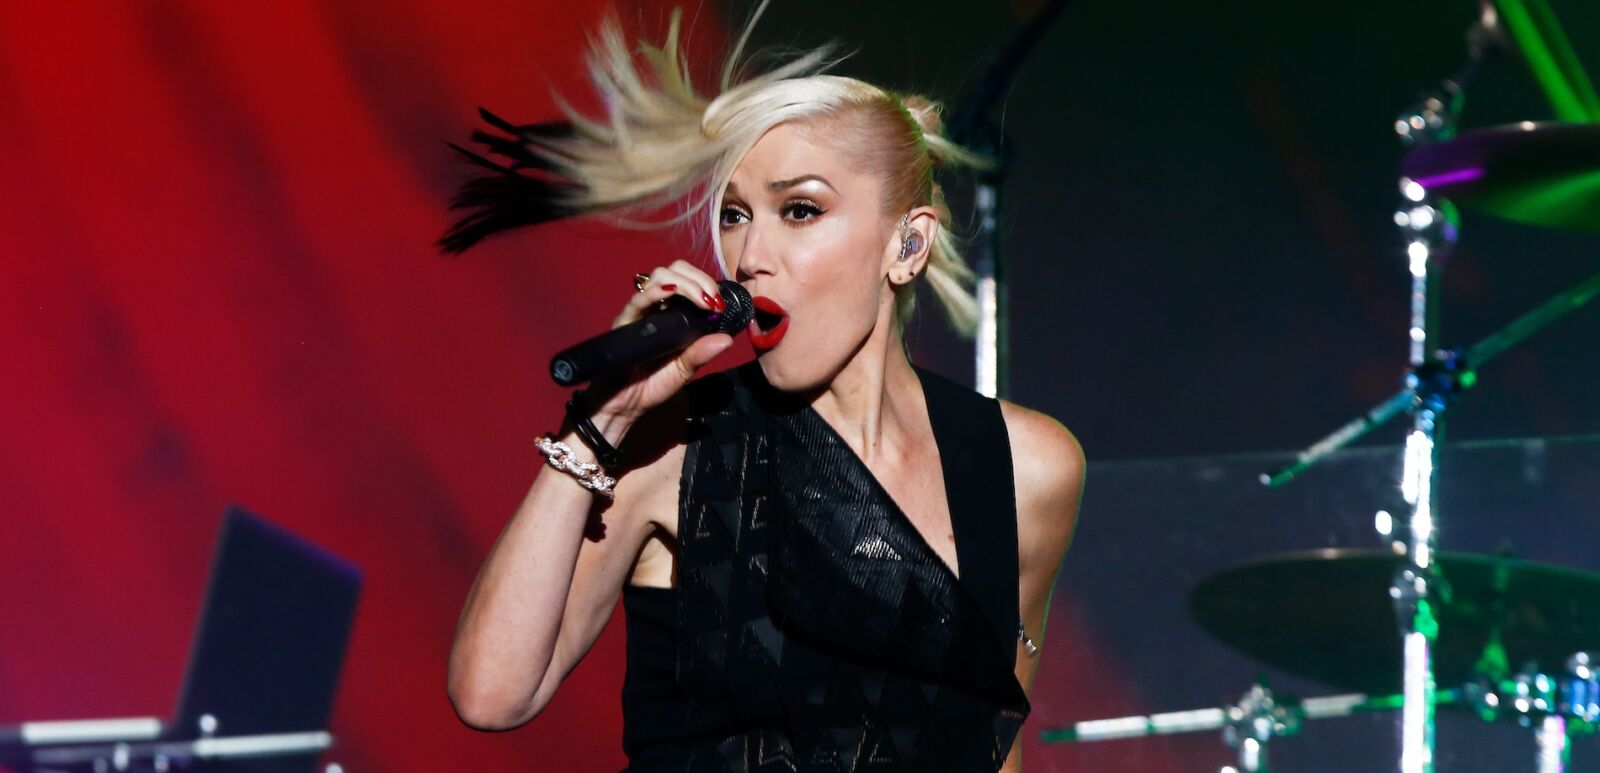 Gwen Stefani performing. Photo via Shutterstock.